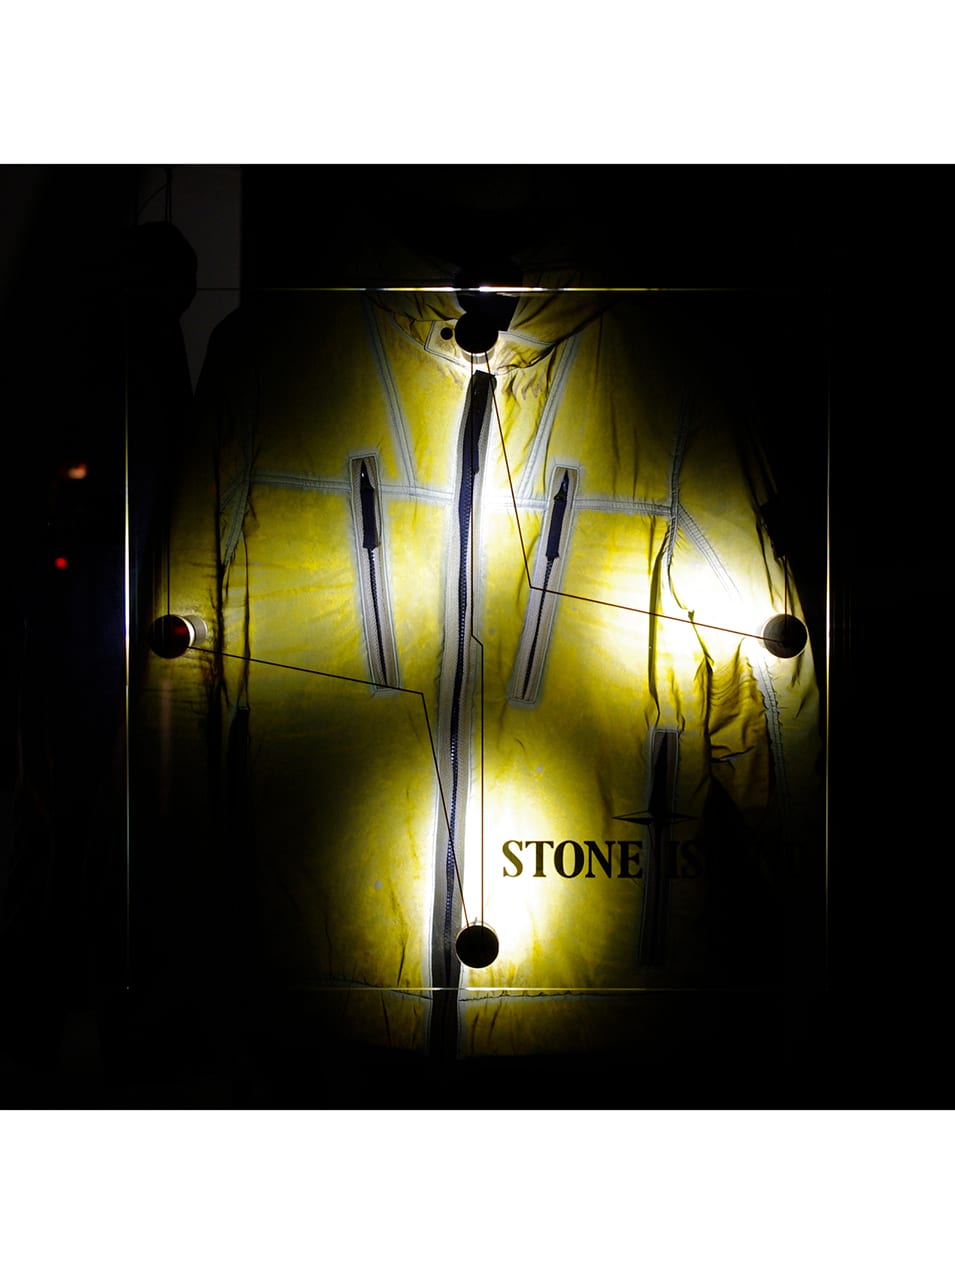 Stone Island reflective jacket display design for Firmament, Berlin